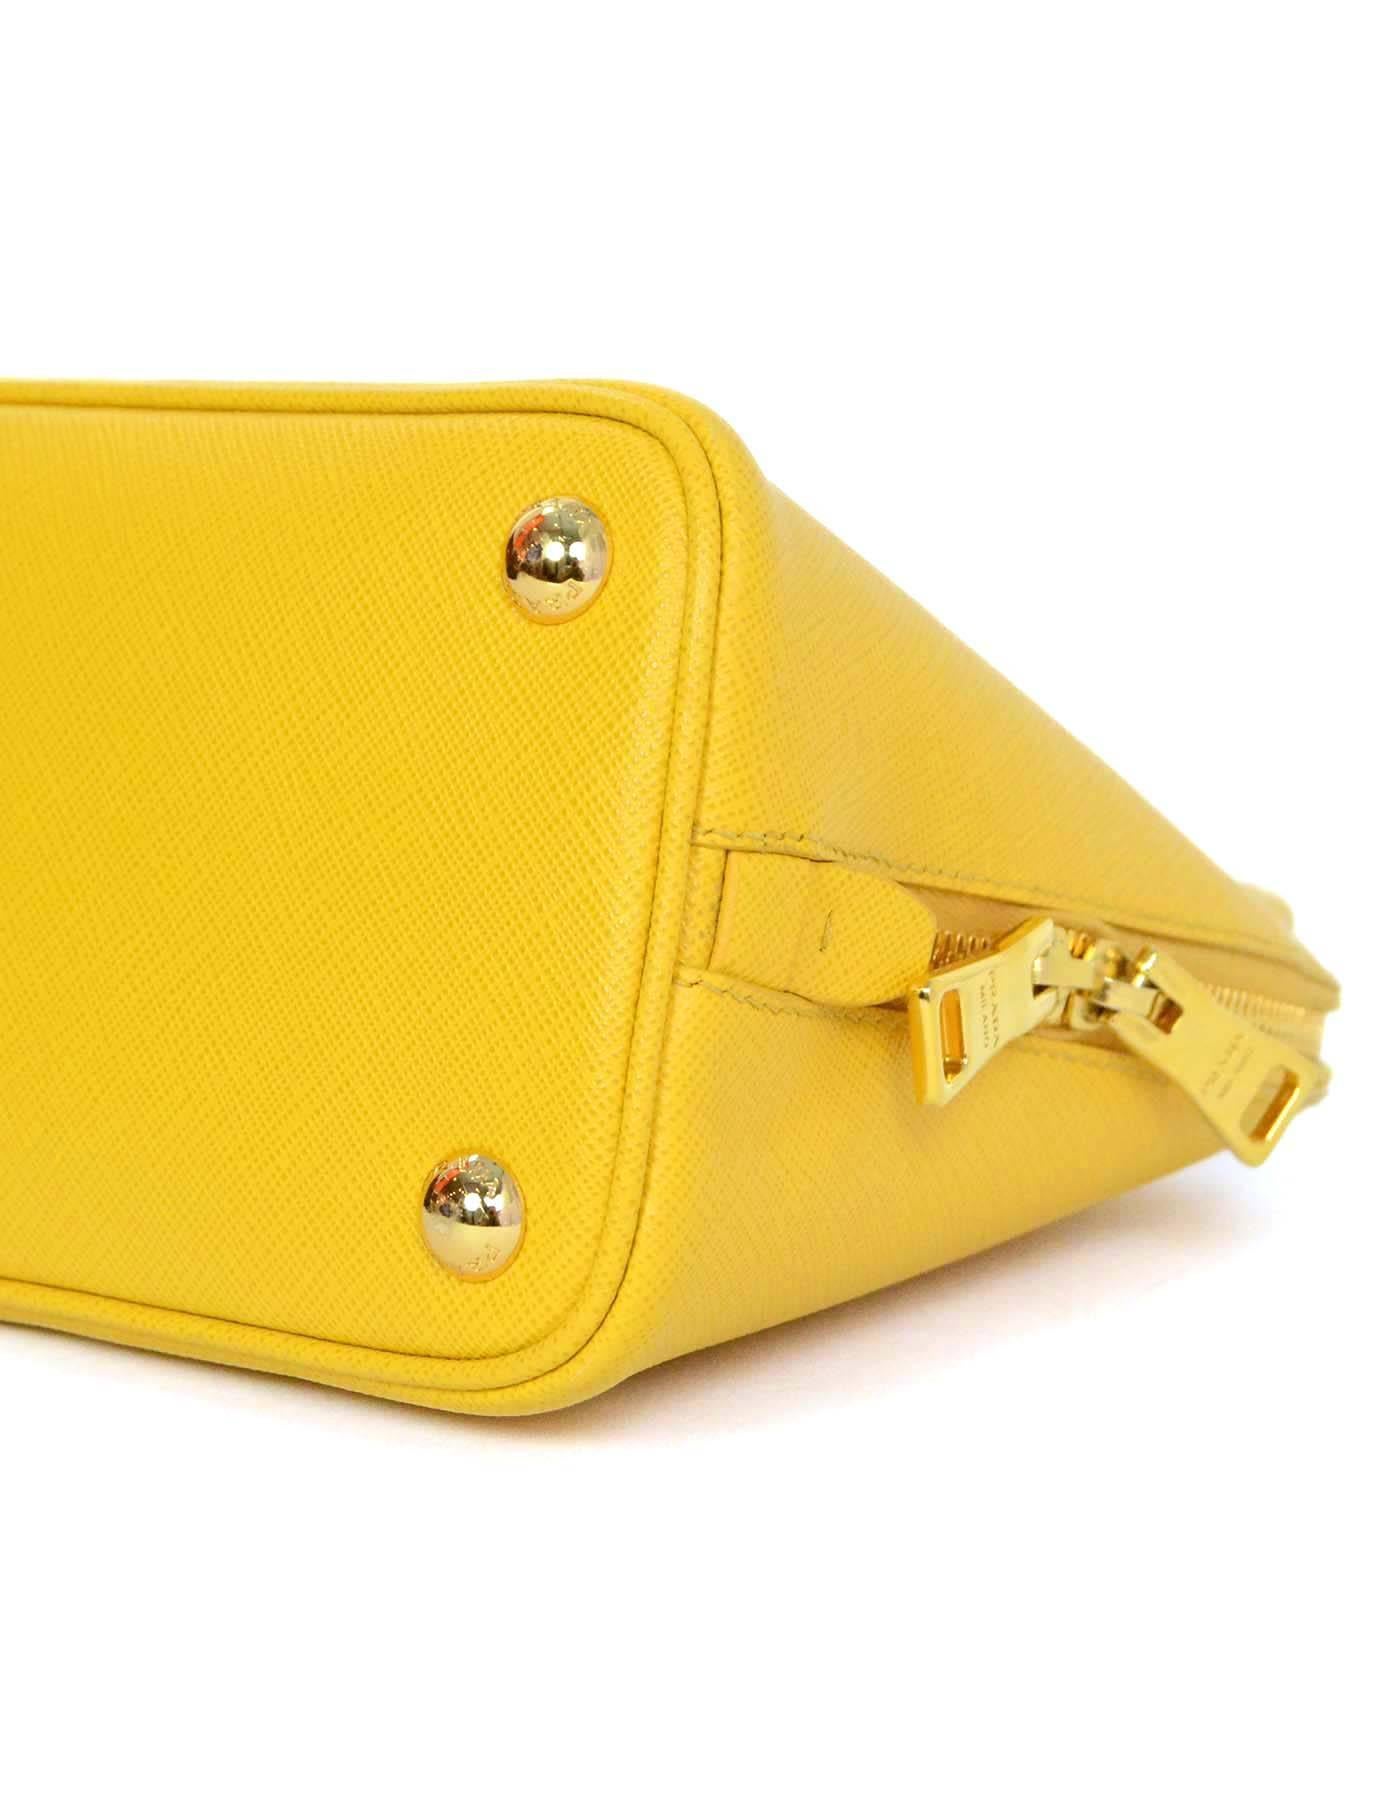 prada yellow purse